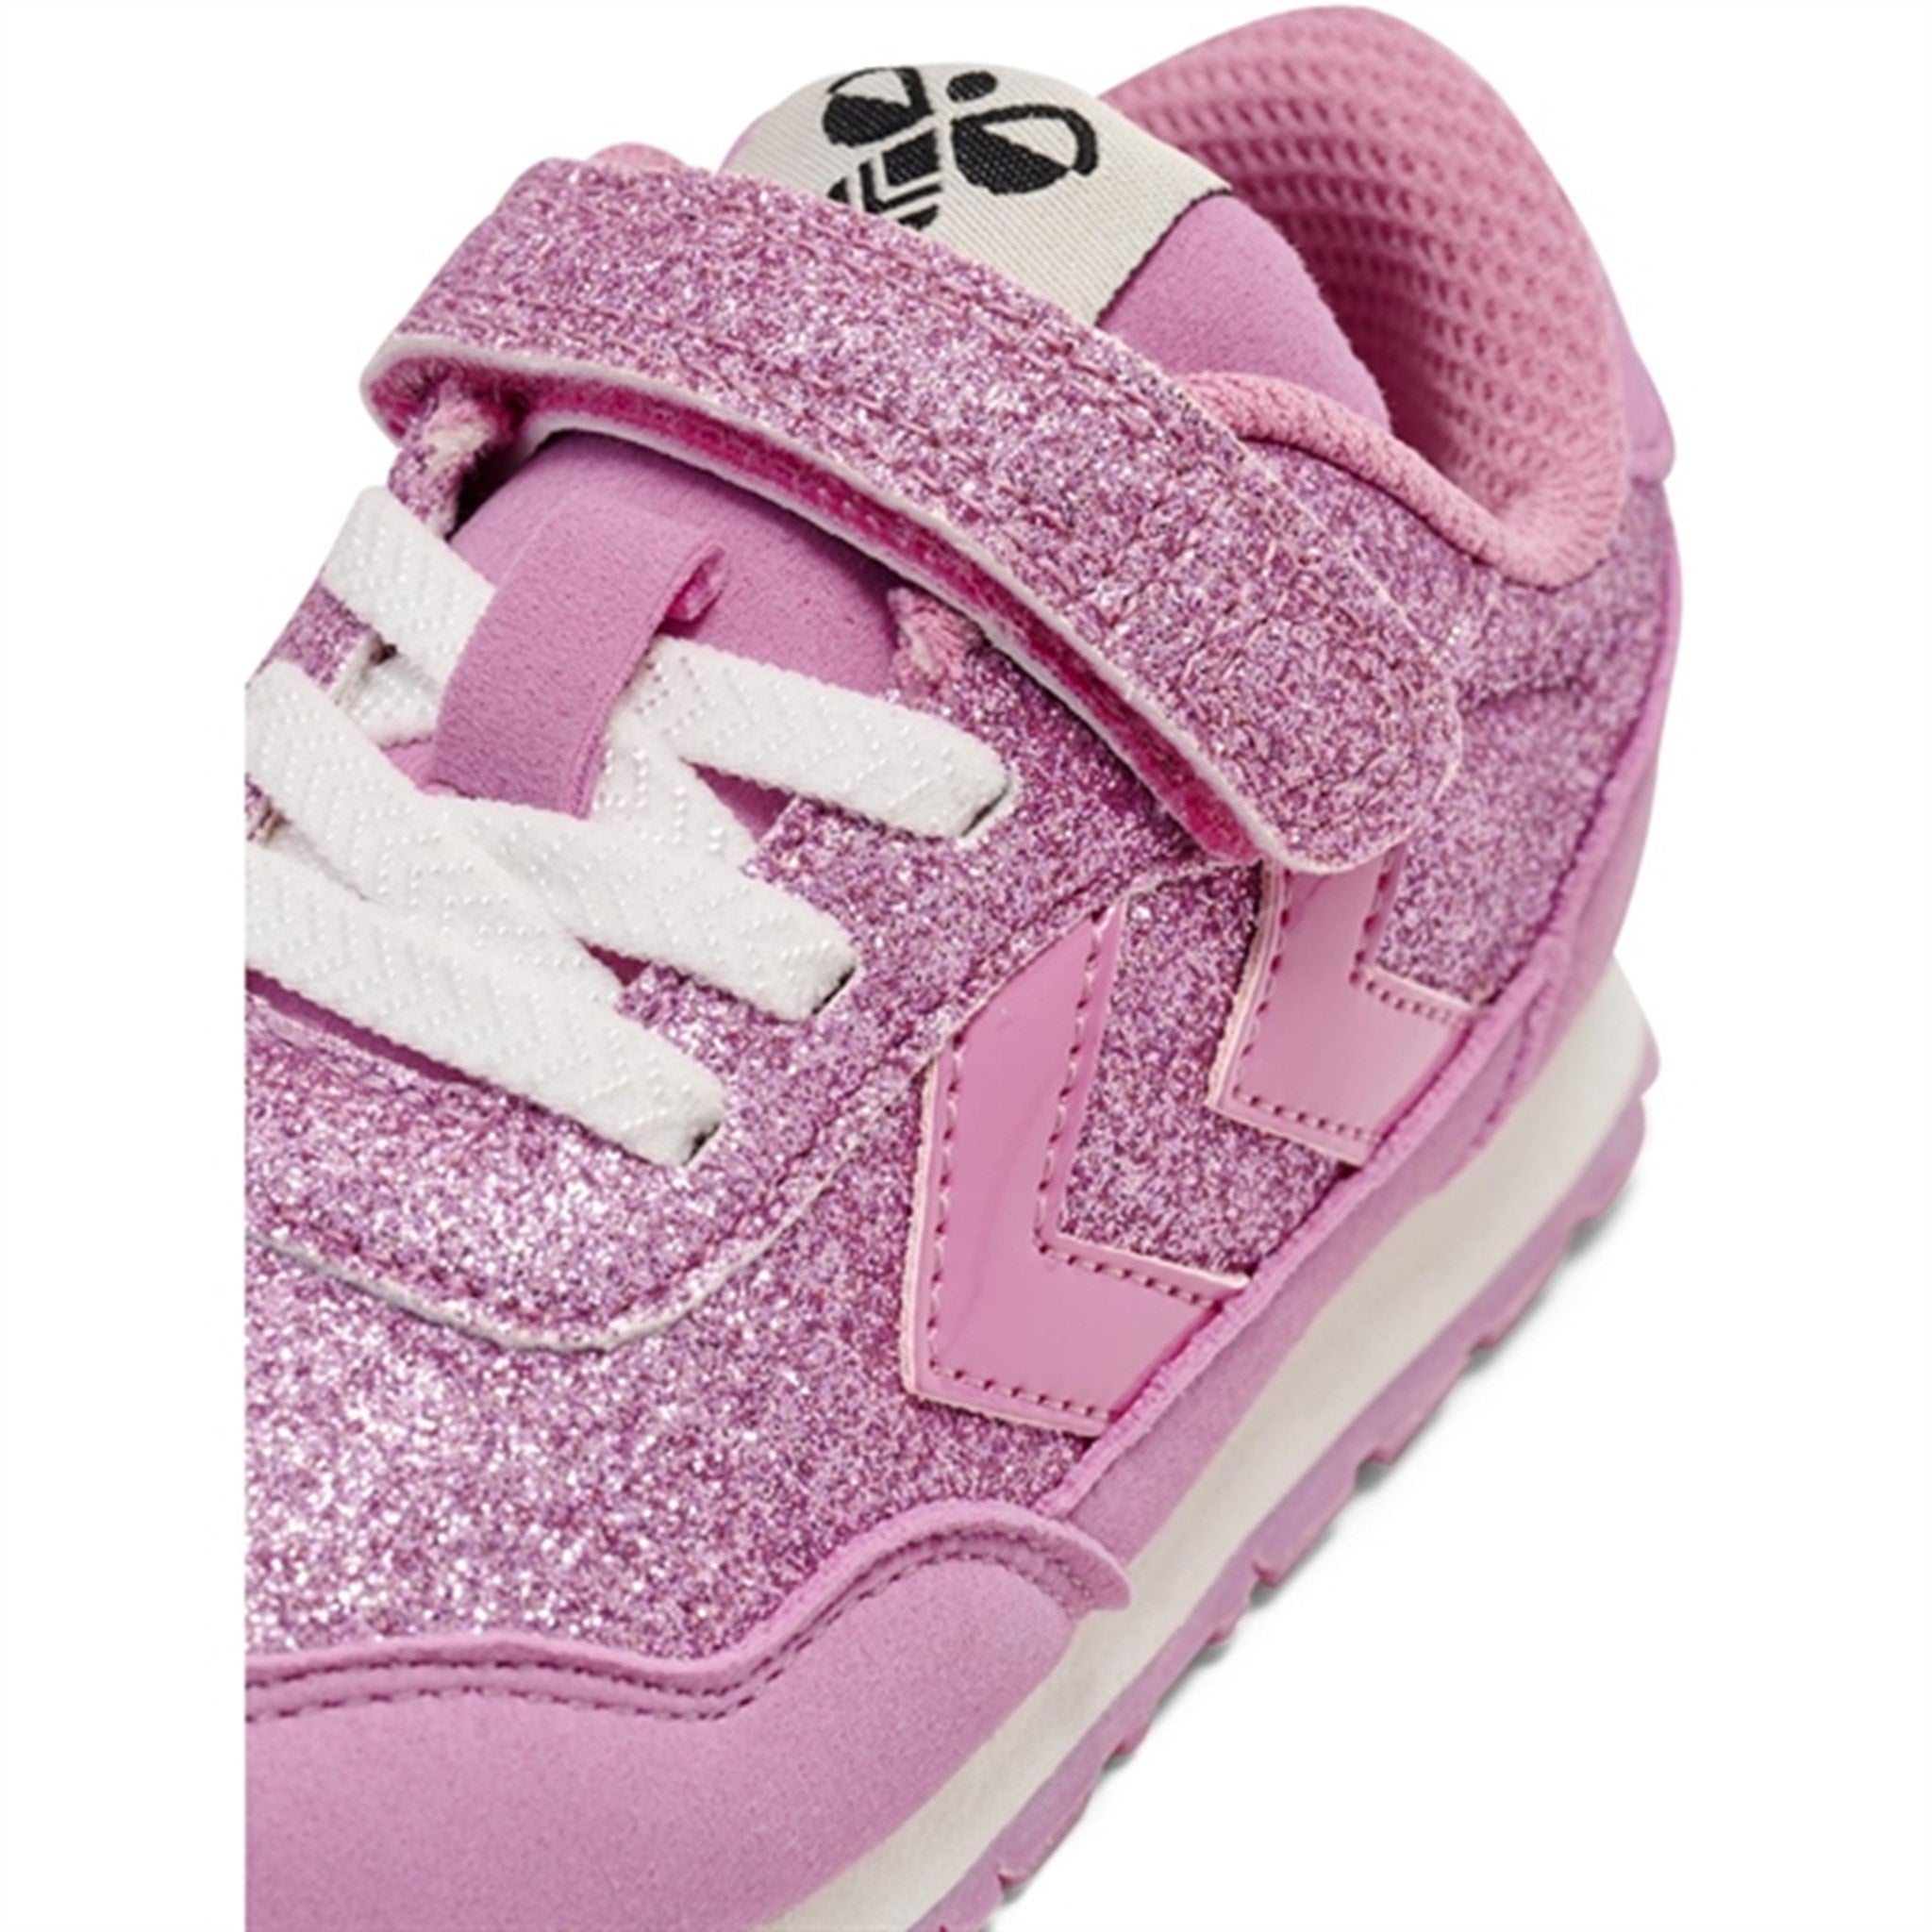 Hummel Reflex Glitter Infant Sneakers Pink 3